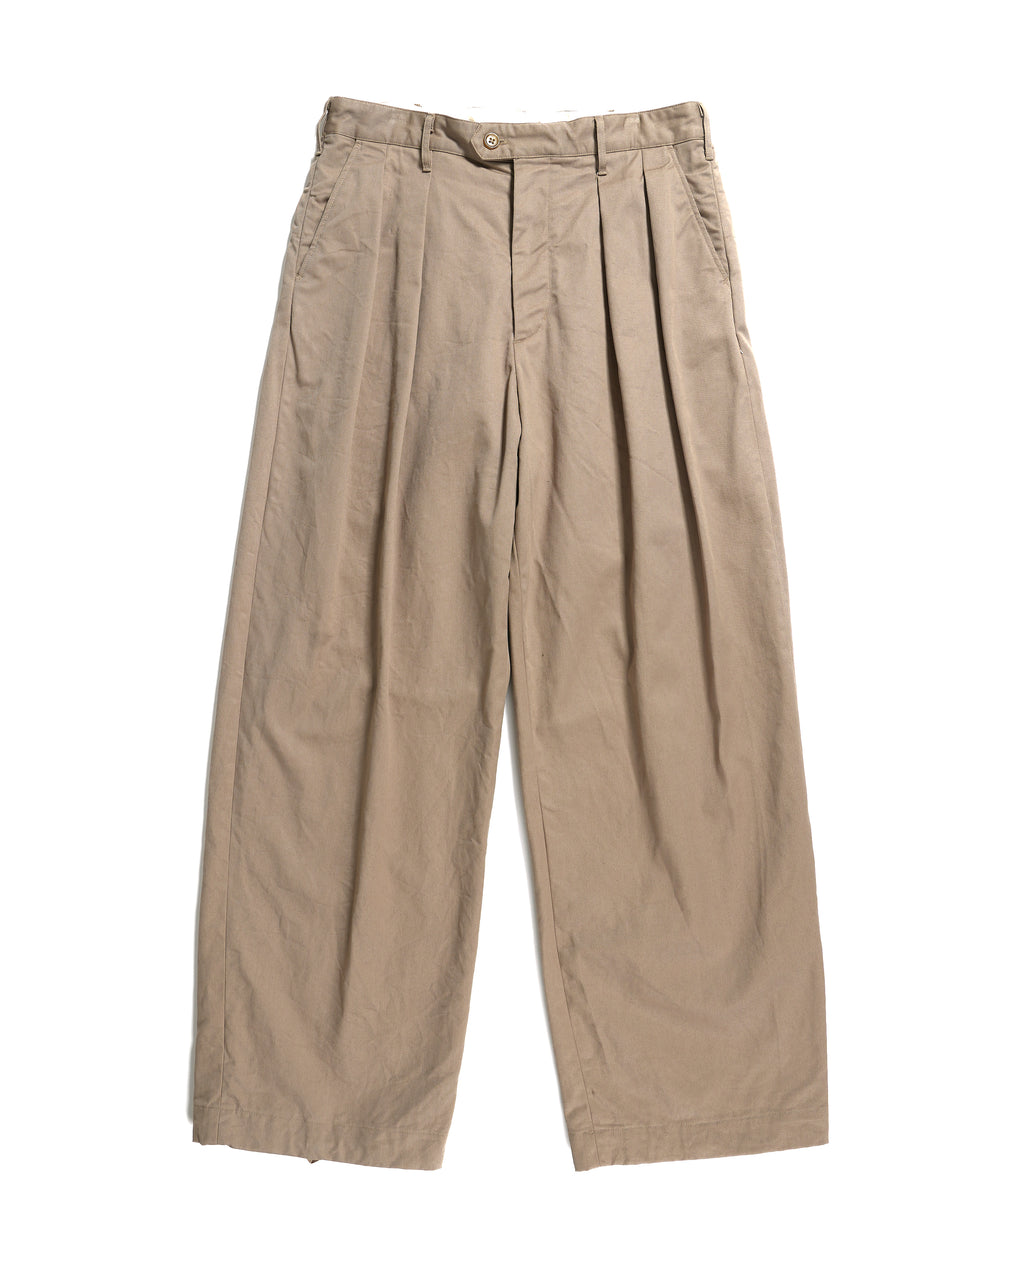 Engineered Garments Oxford Pants - Khaki Chino Twill